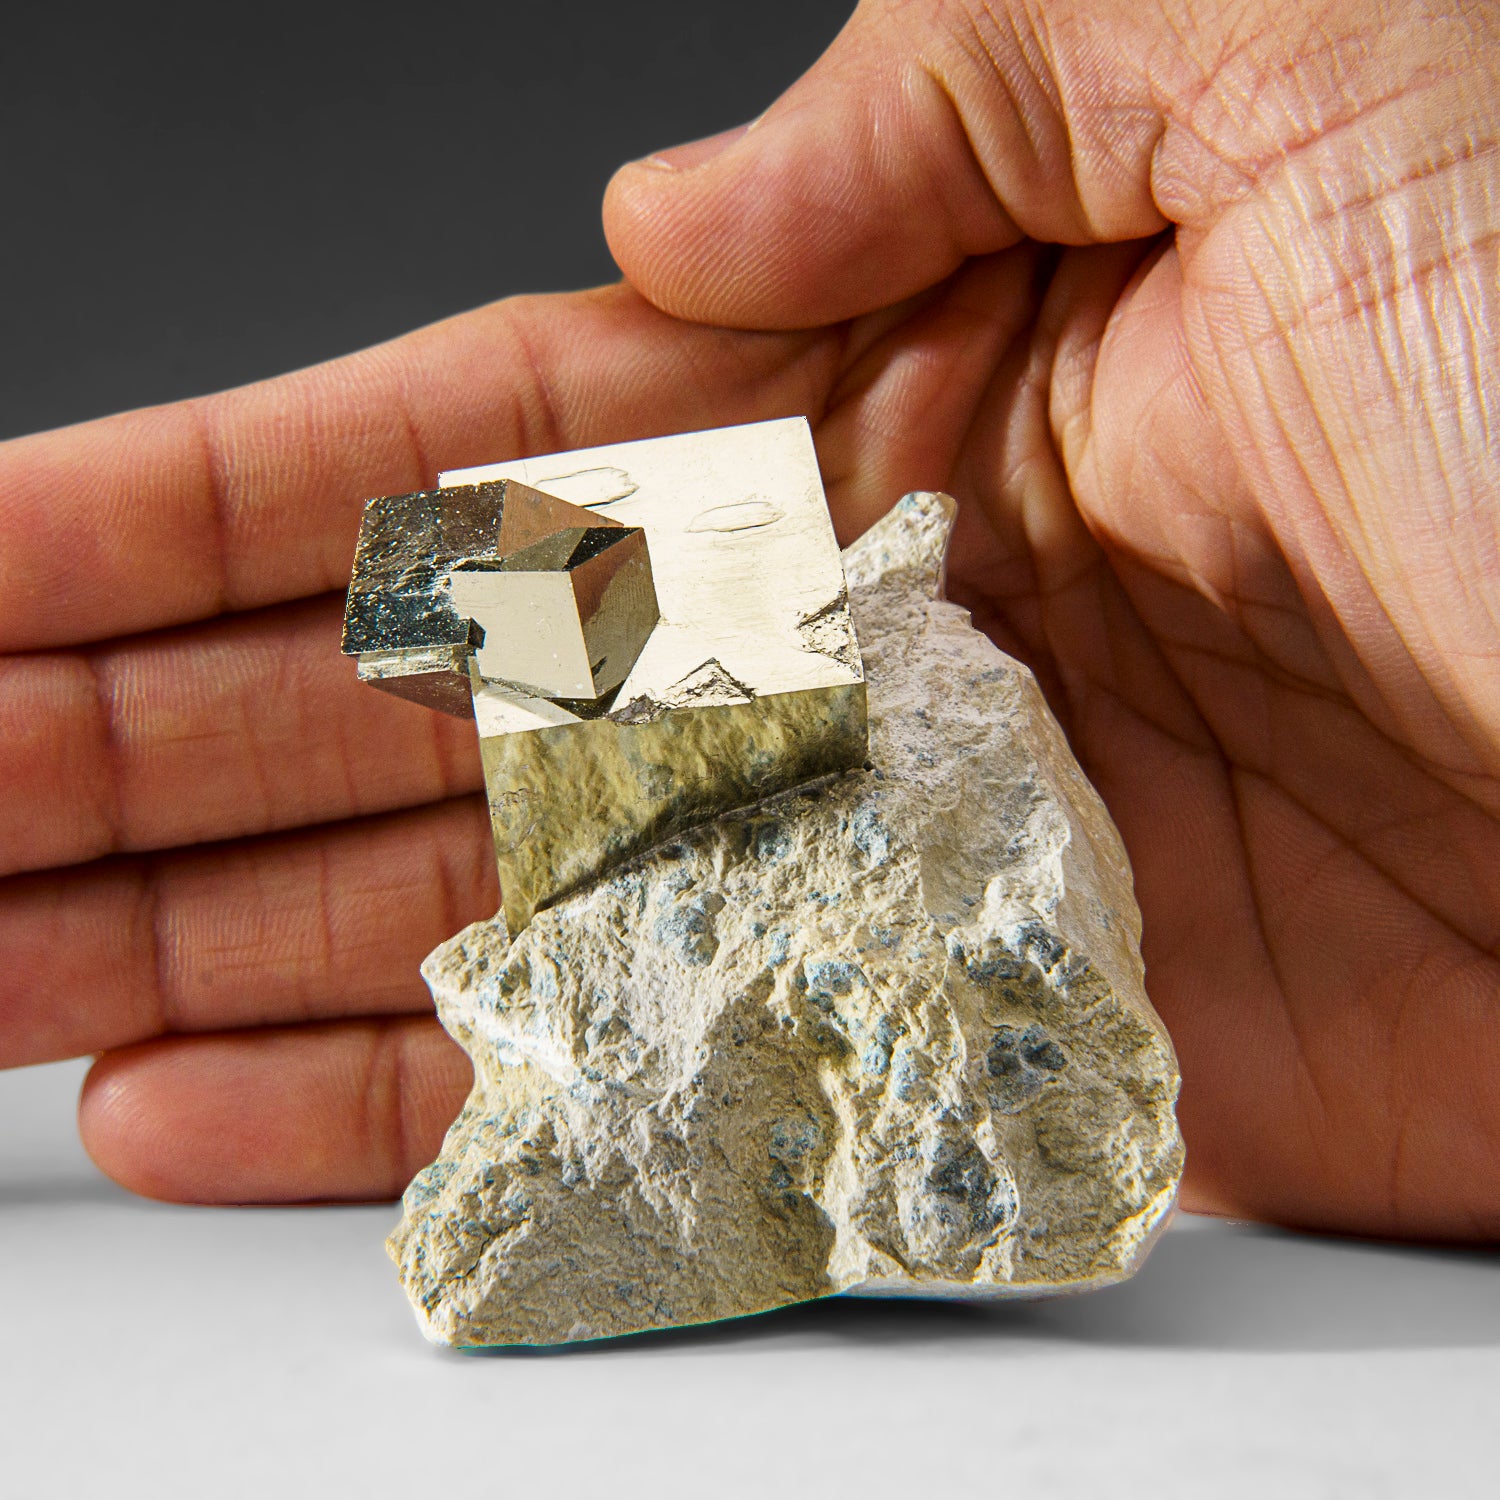 Pyrite Cube on Basalt from Navajún, La Rioja Province, Spain (208 grams)